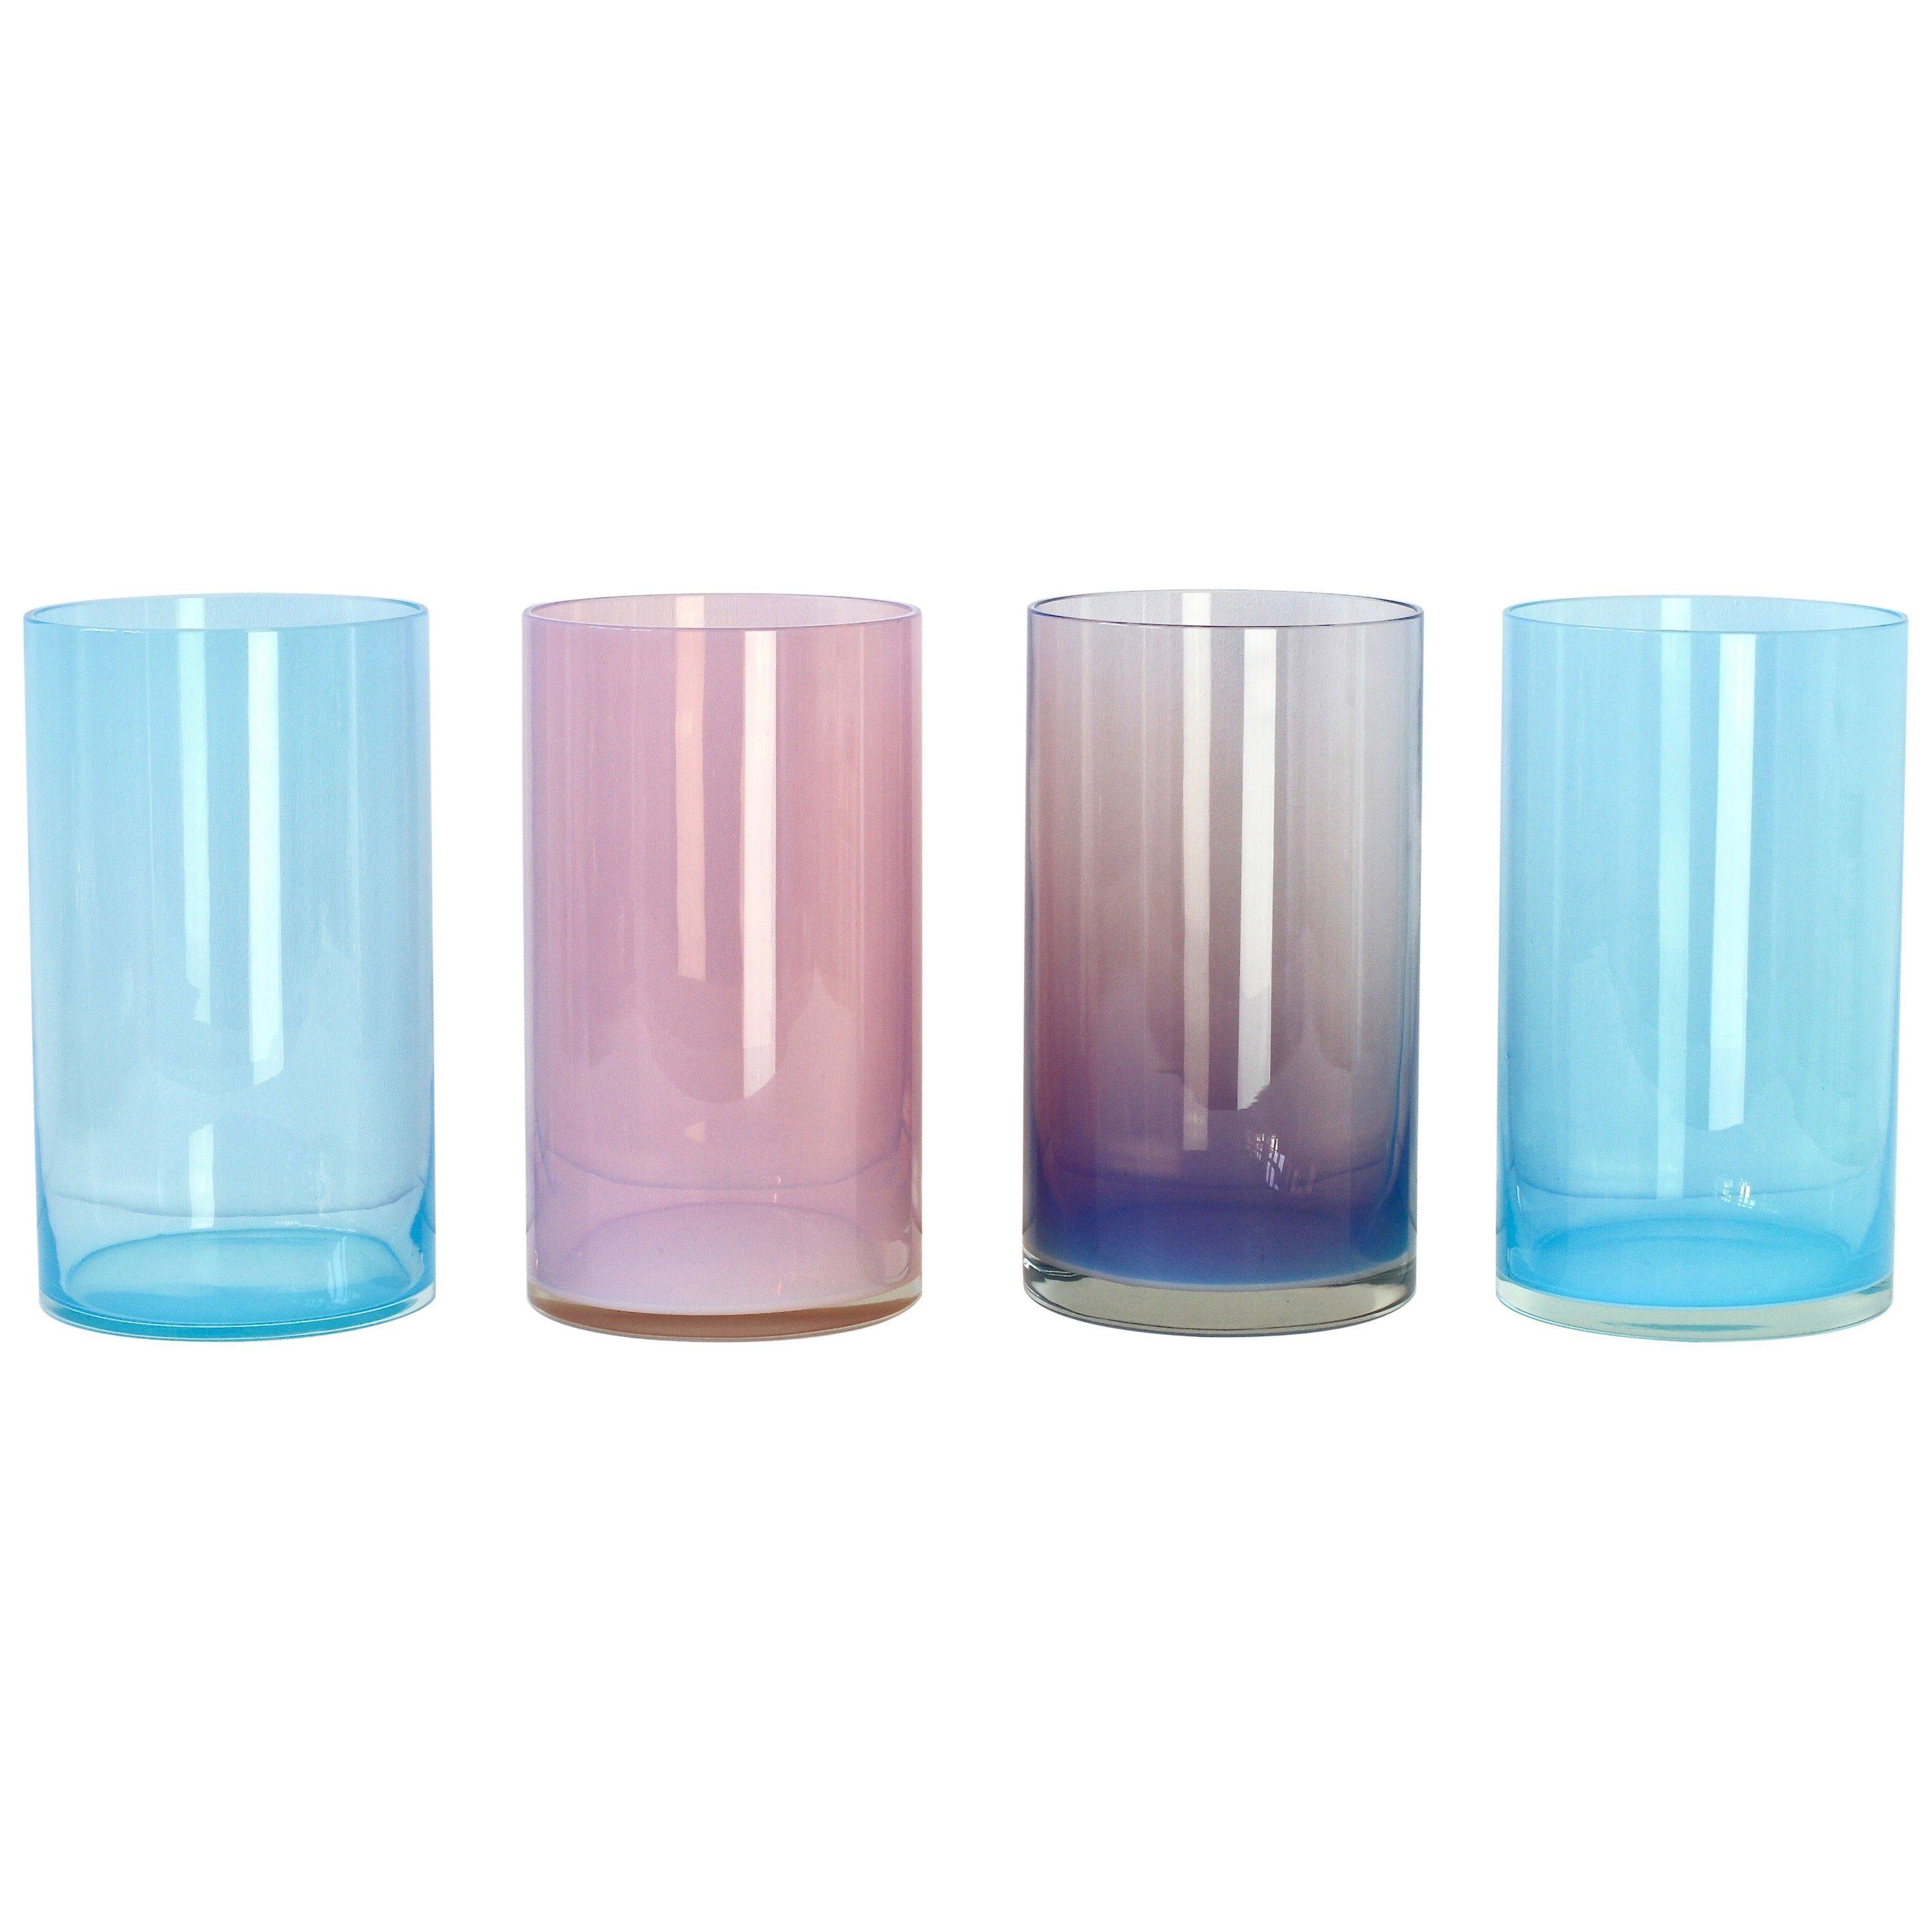 Antonio da Ros for Cenedese Murano Glass Set of Vibrantly Colored Glass Vases